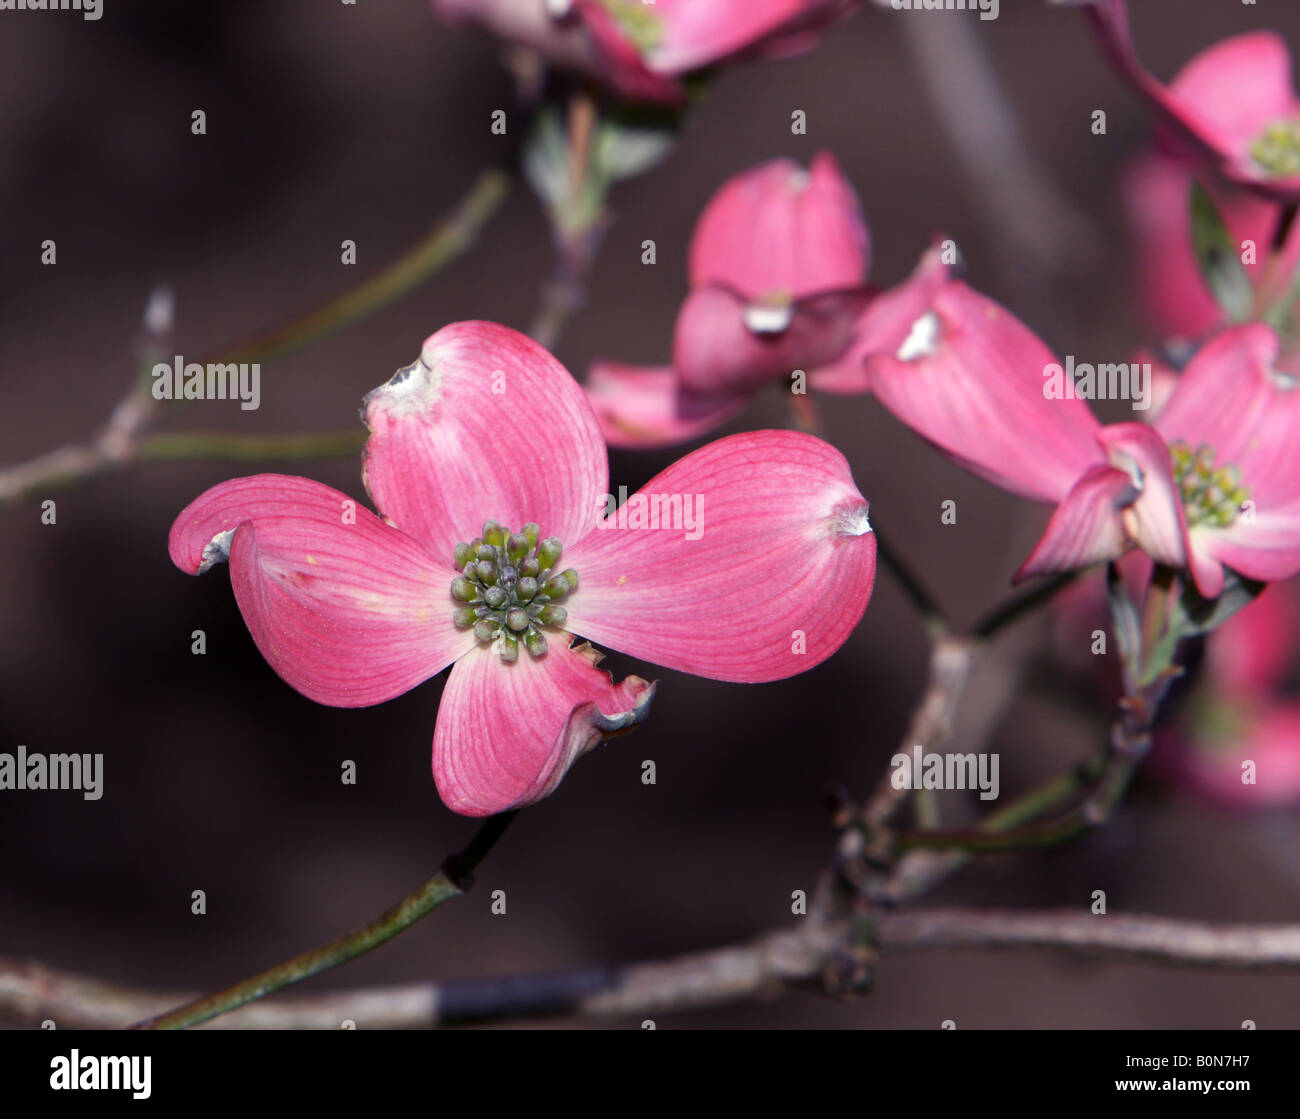 A pink flowering dogwood cornus florida rubra. Stock Photo